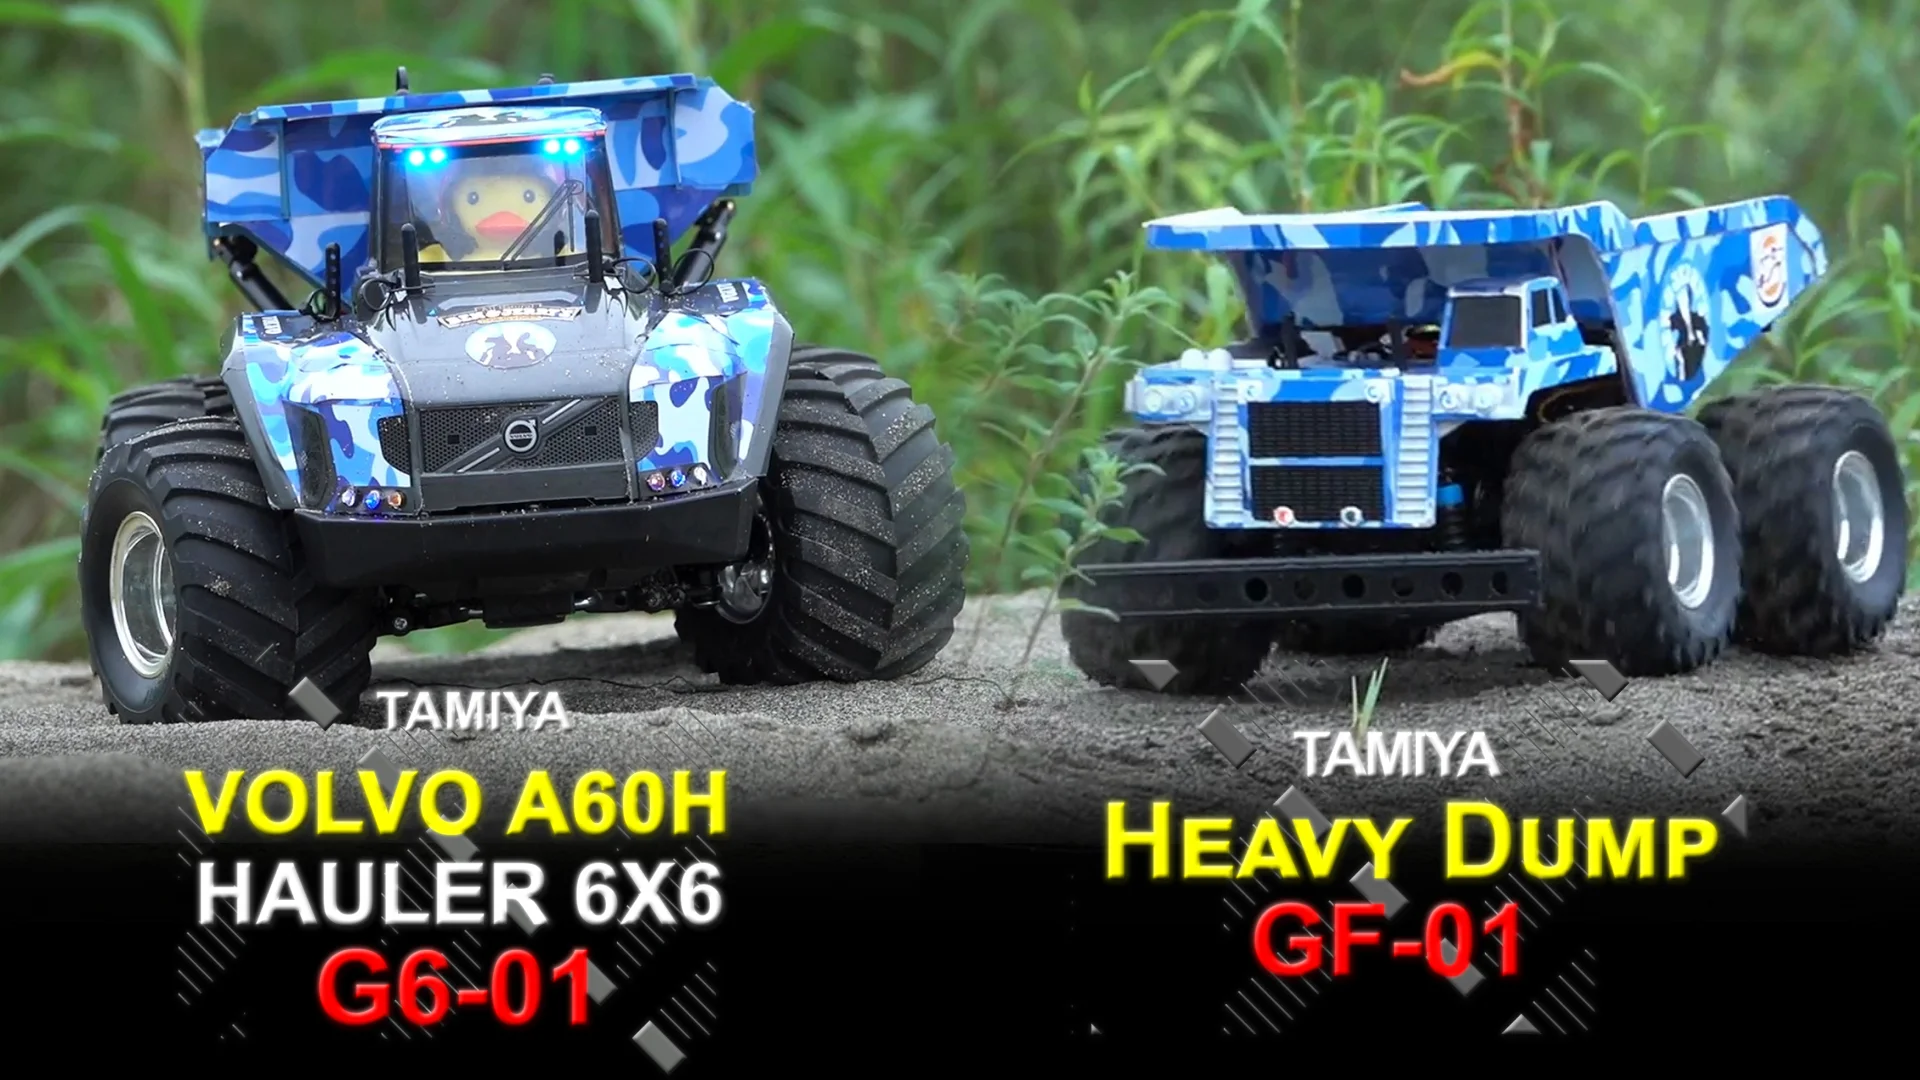 TAMIYA VOLVO A60H Hauler 6x6 G6-01 & Heavy Dump GF-01 砂山走行動画